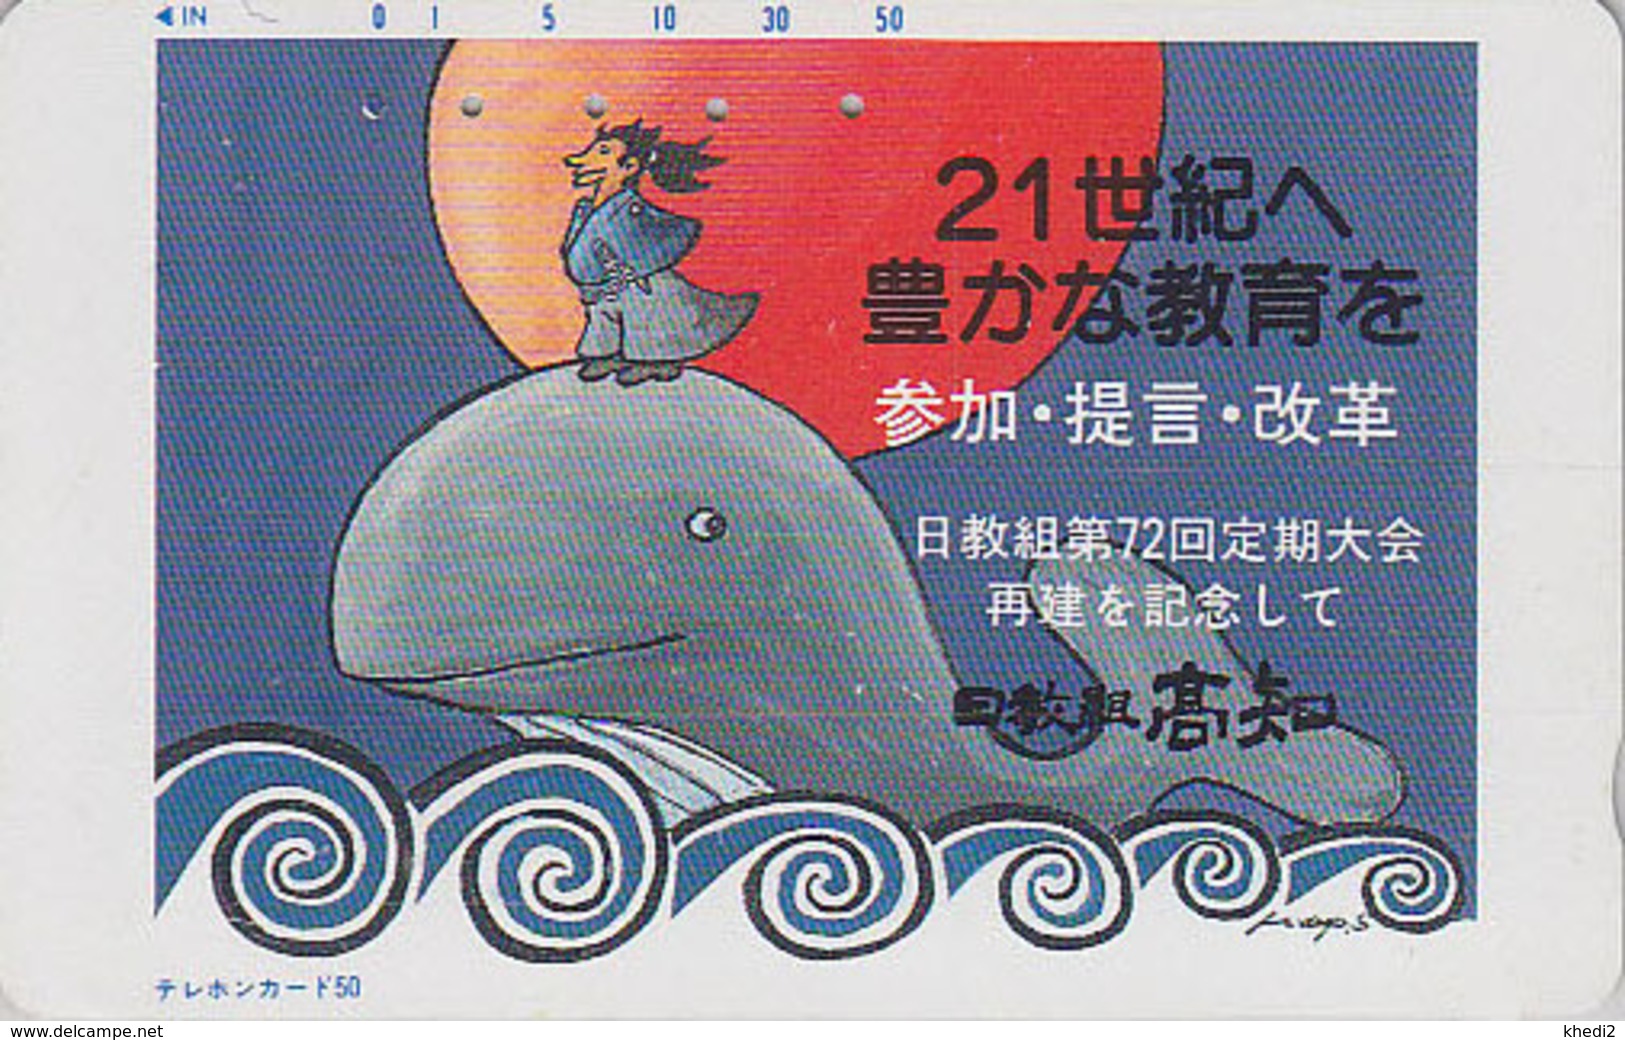 Télécarte Japon / 330-30220 - ANIMAL - BALEINE - WHALE & SUNSET Japan Phonecard - WAL Telefonkarte - Comics - 460 - Dolfijnen